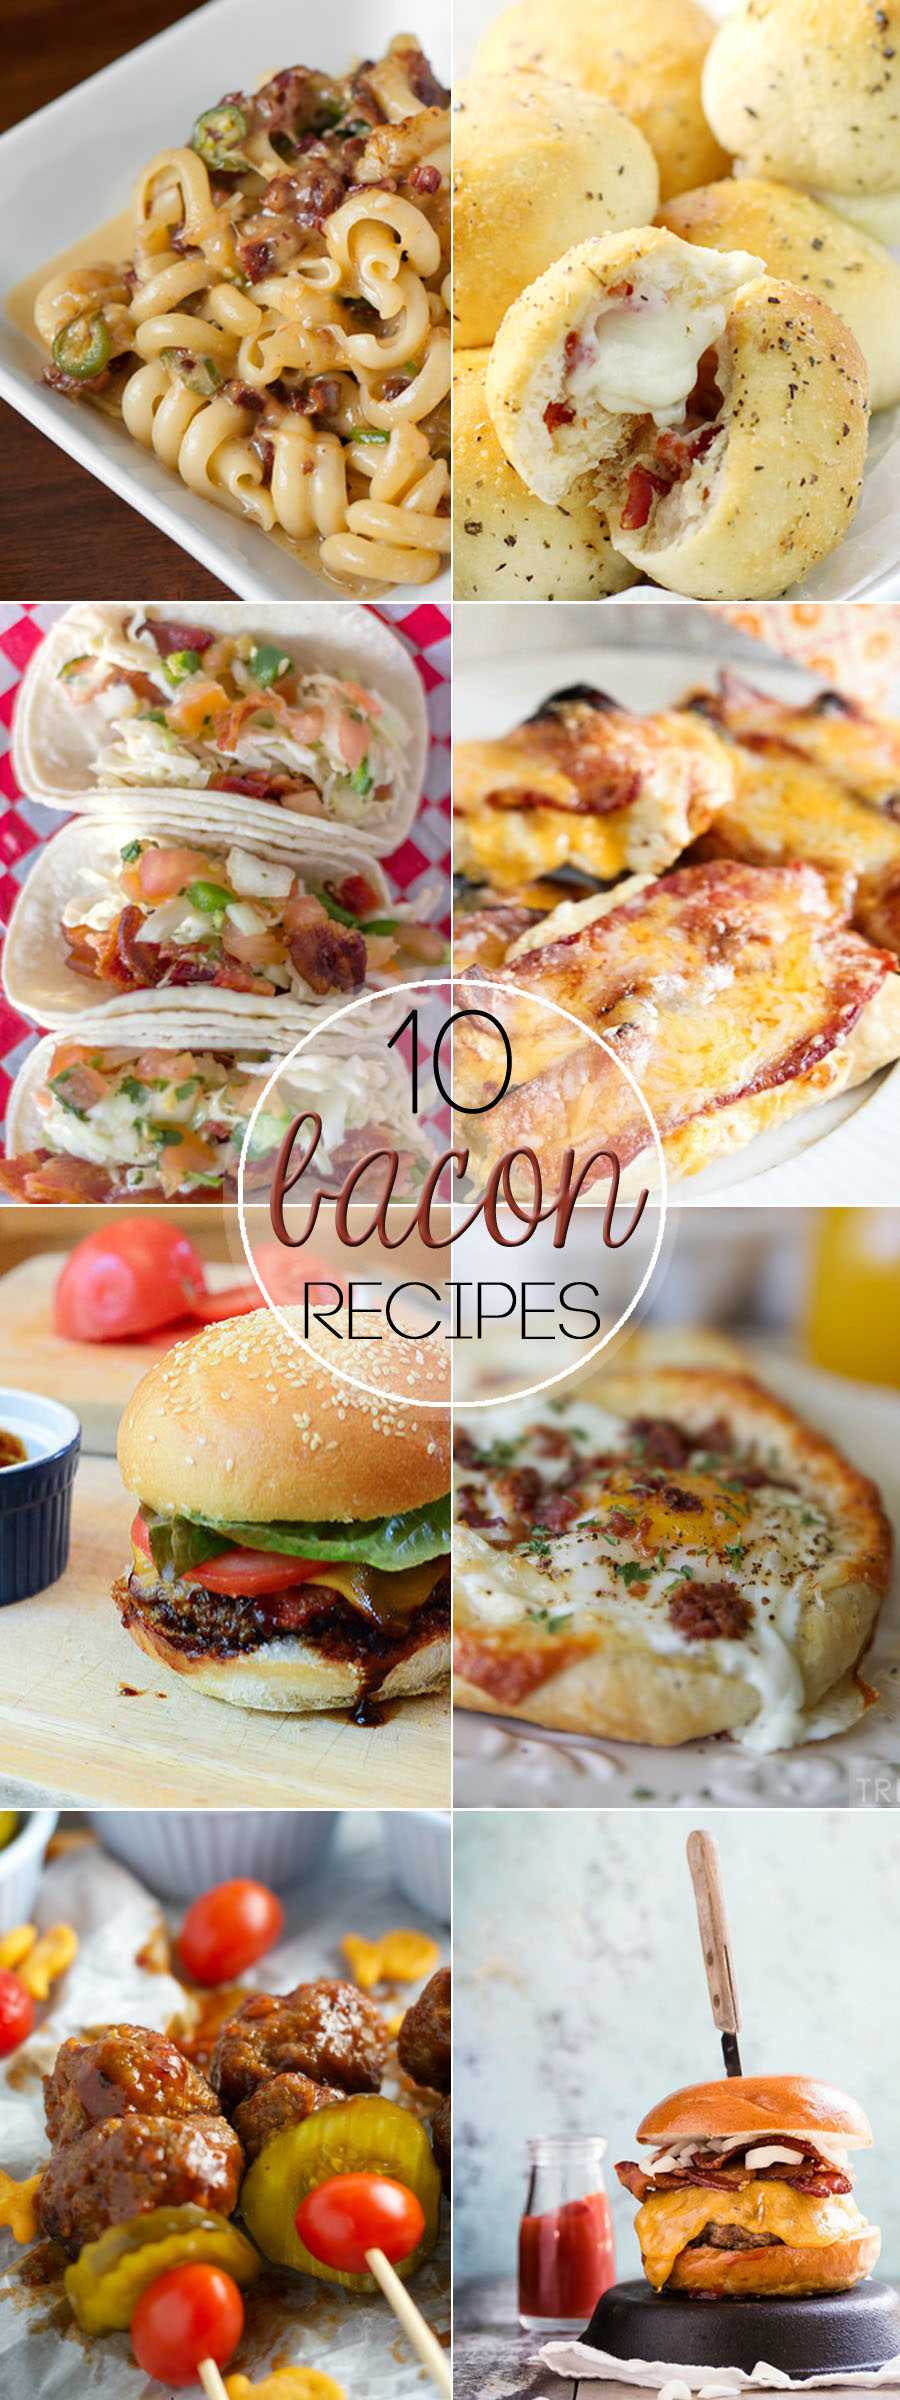 10-bacon-recipes-pinterest